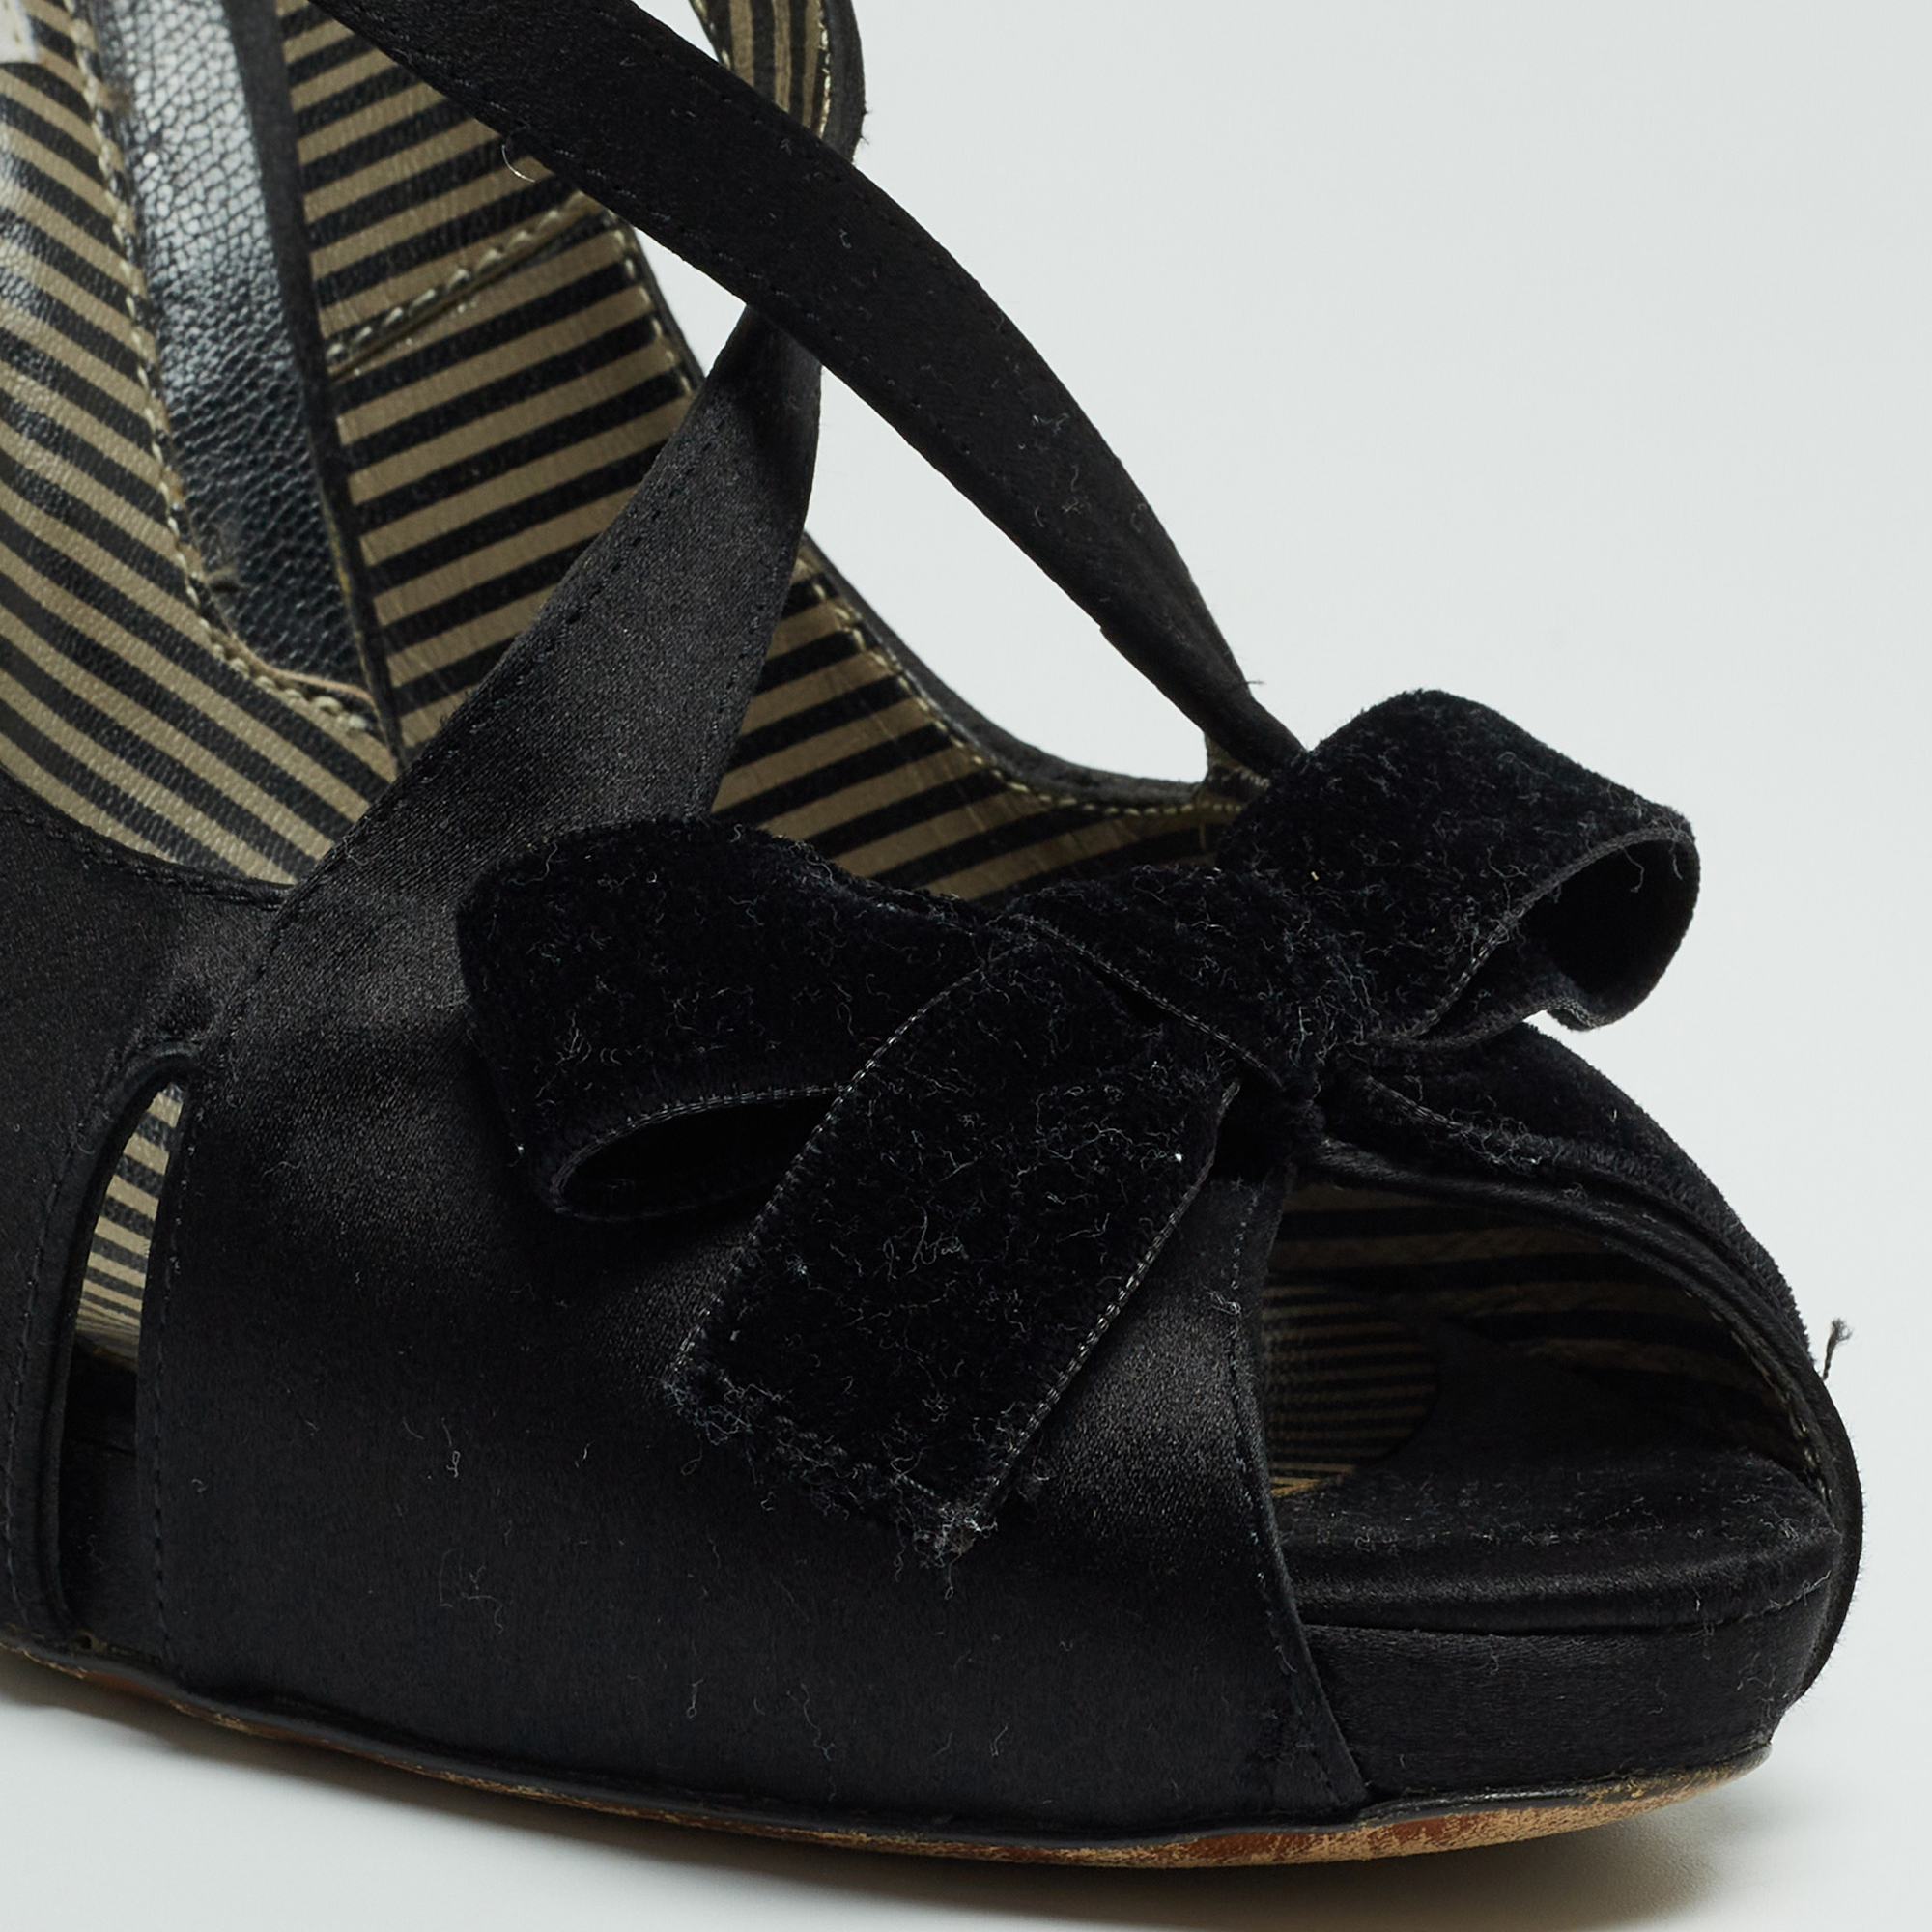 Moschino Black Satin And Velvet Bow Slingback Sandals Size 38.5